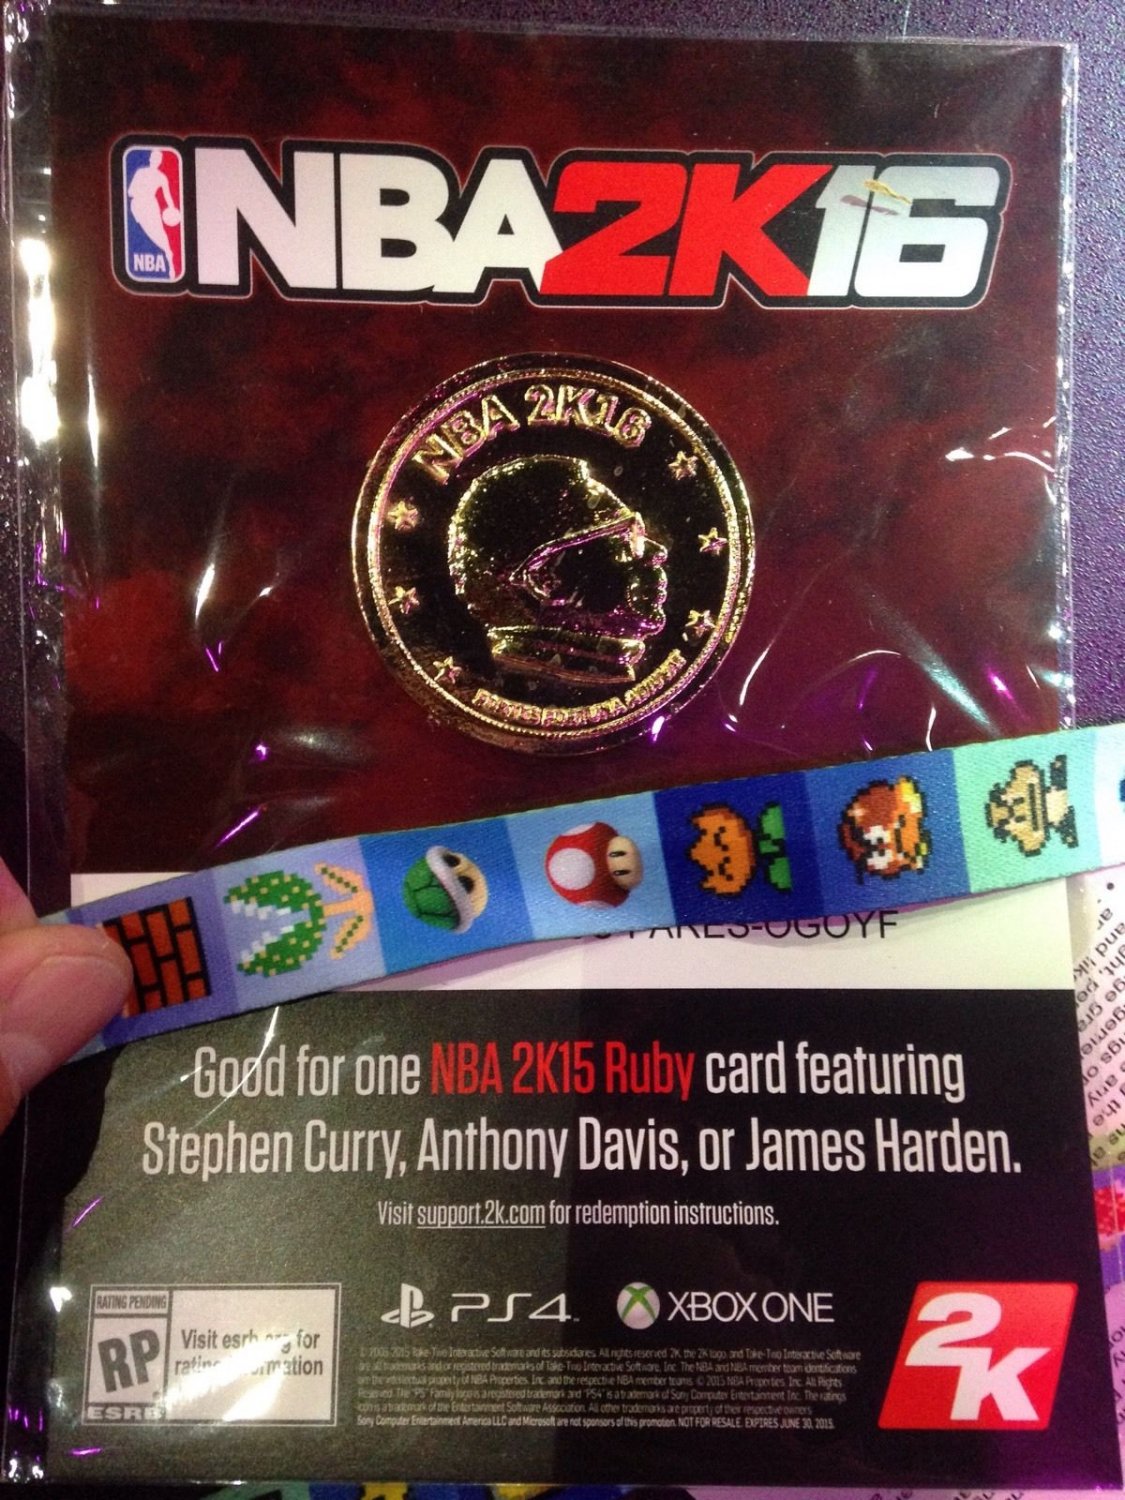 E3 2015 Exclusive NBA 2K15 Ruby card code